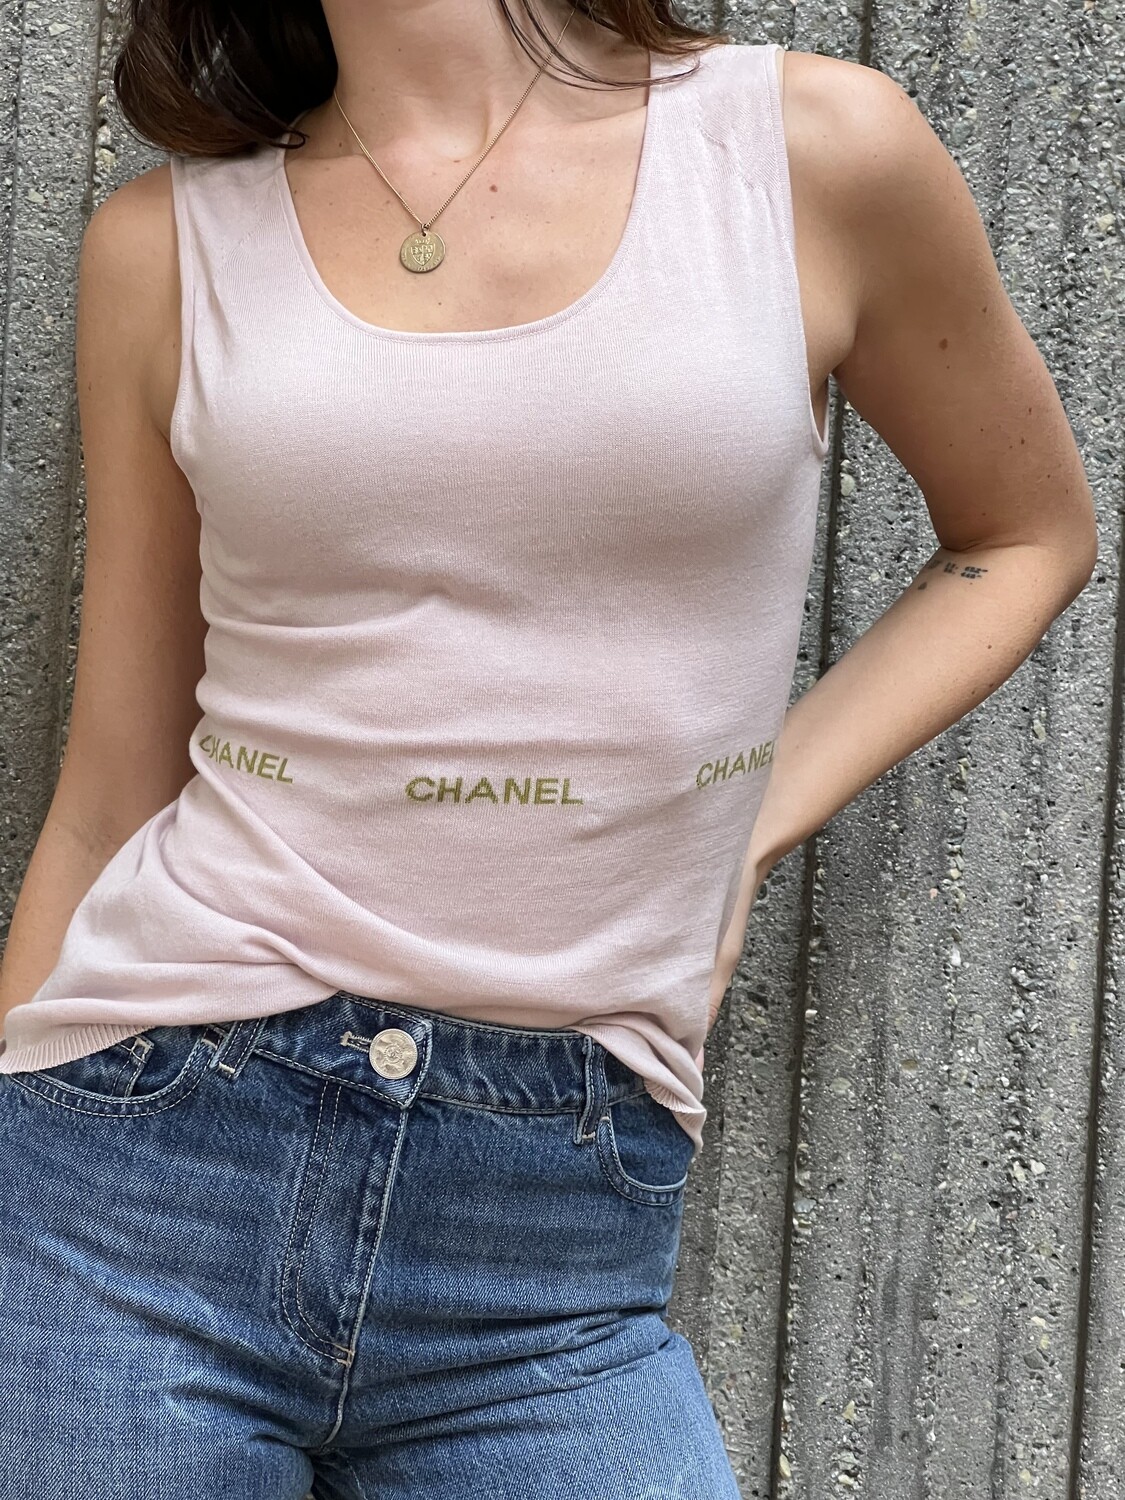 Chanel Tank Tops